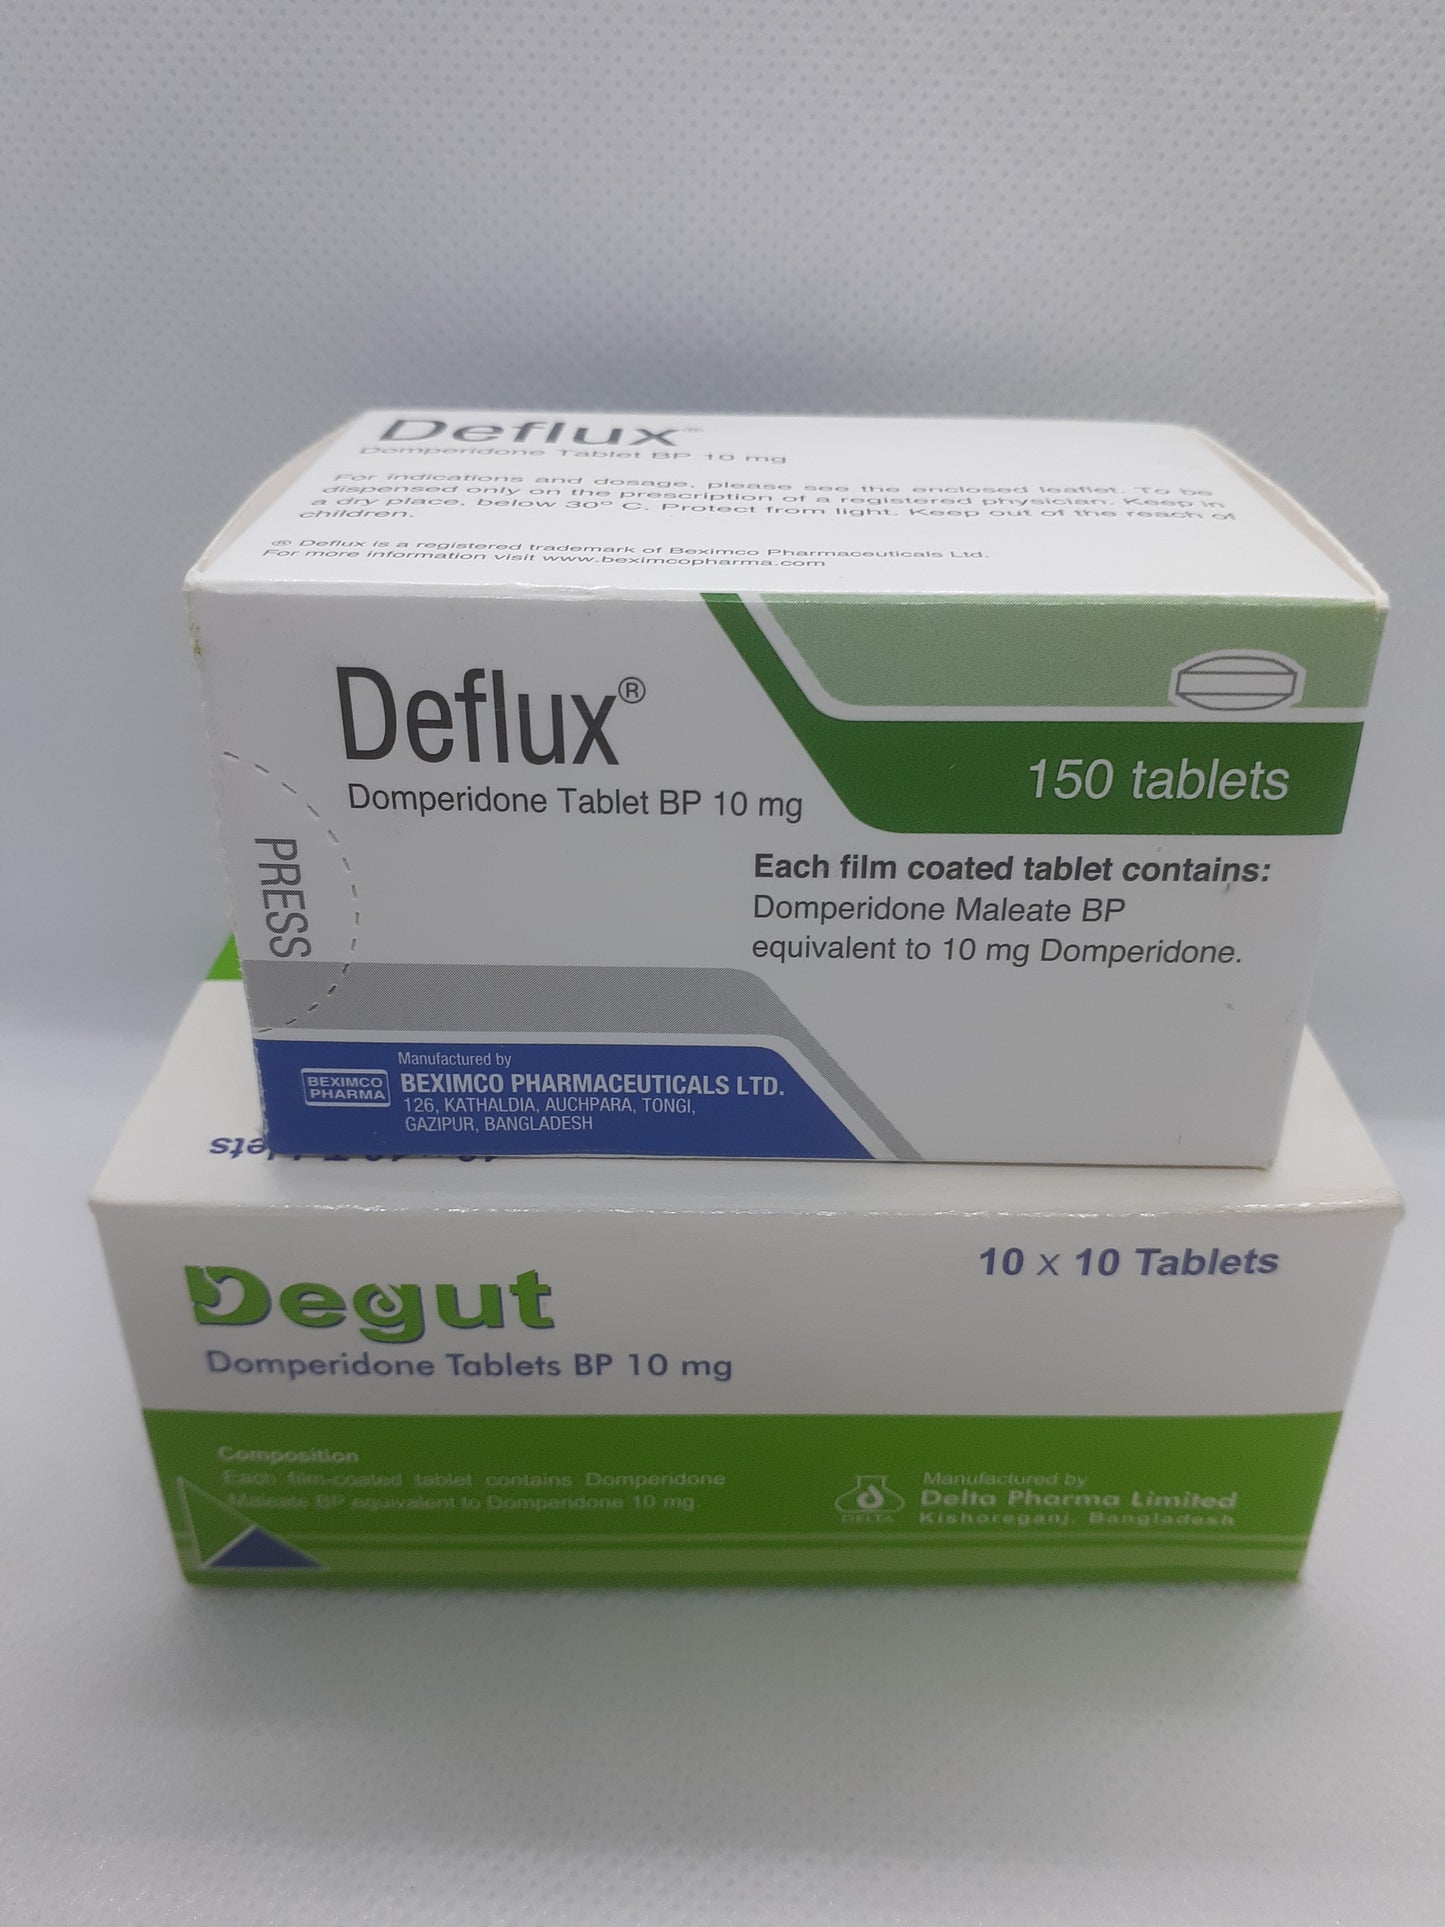 Deflux and Degut 6 box